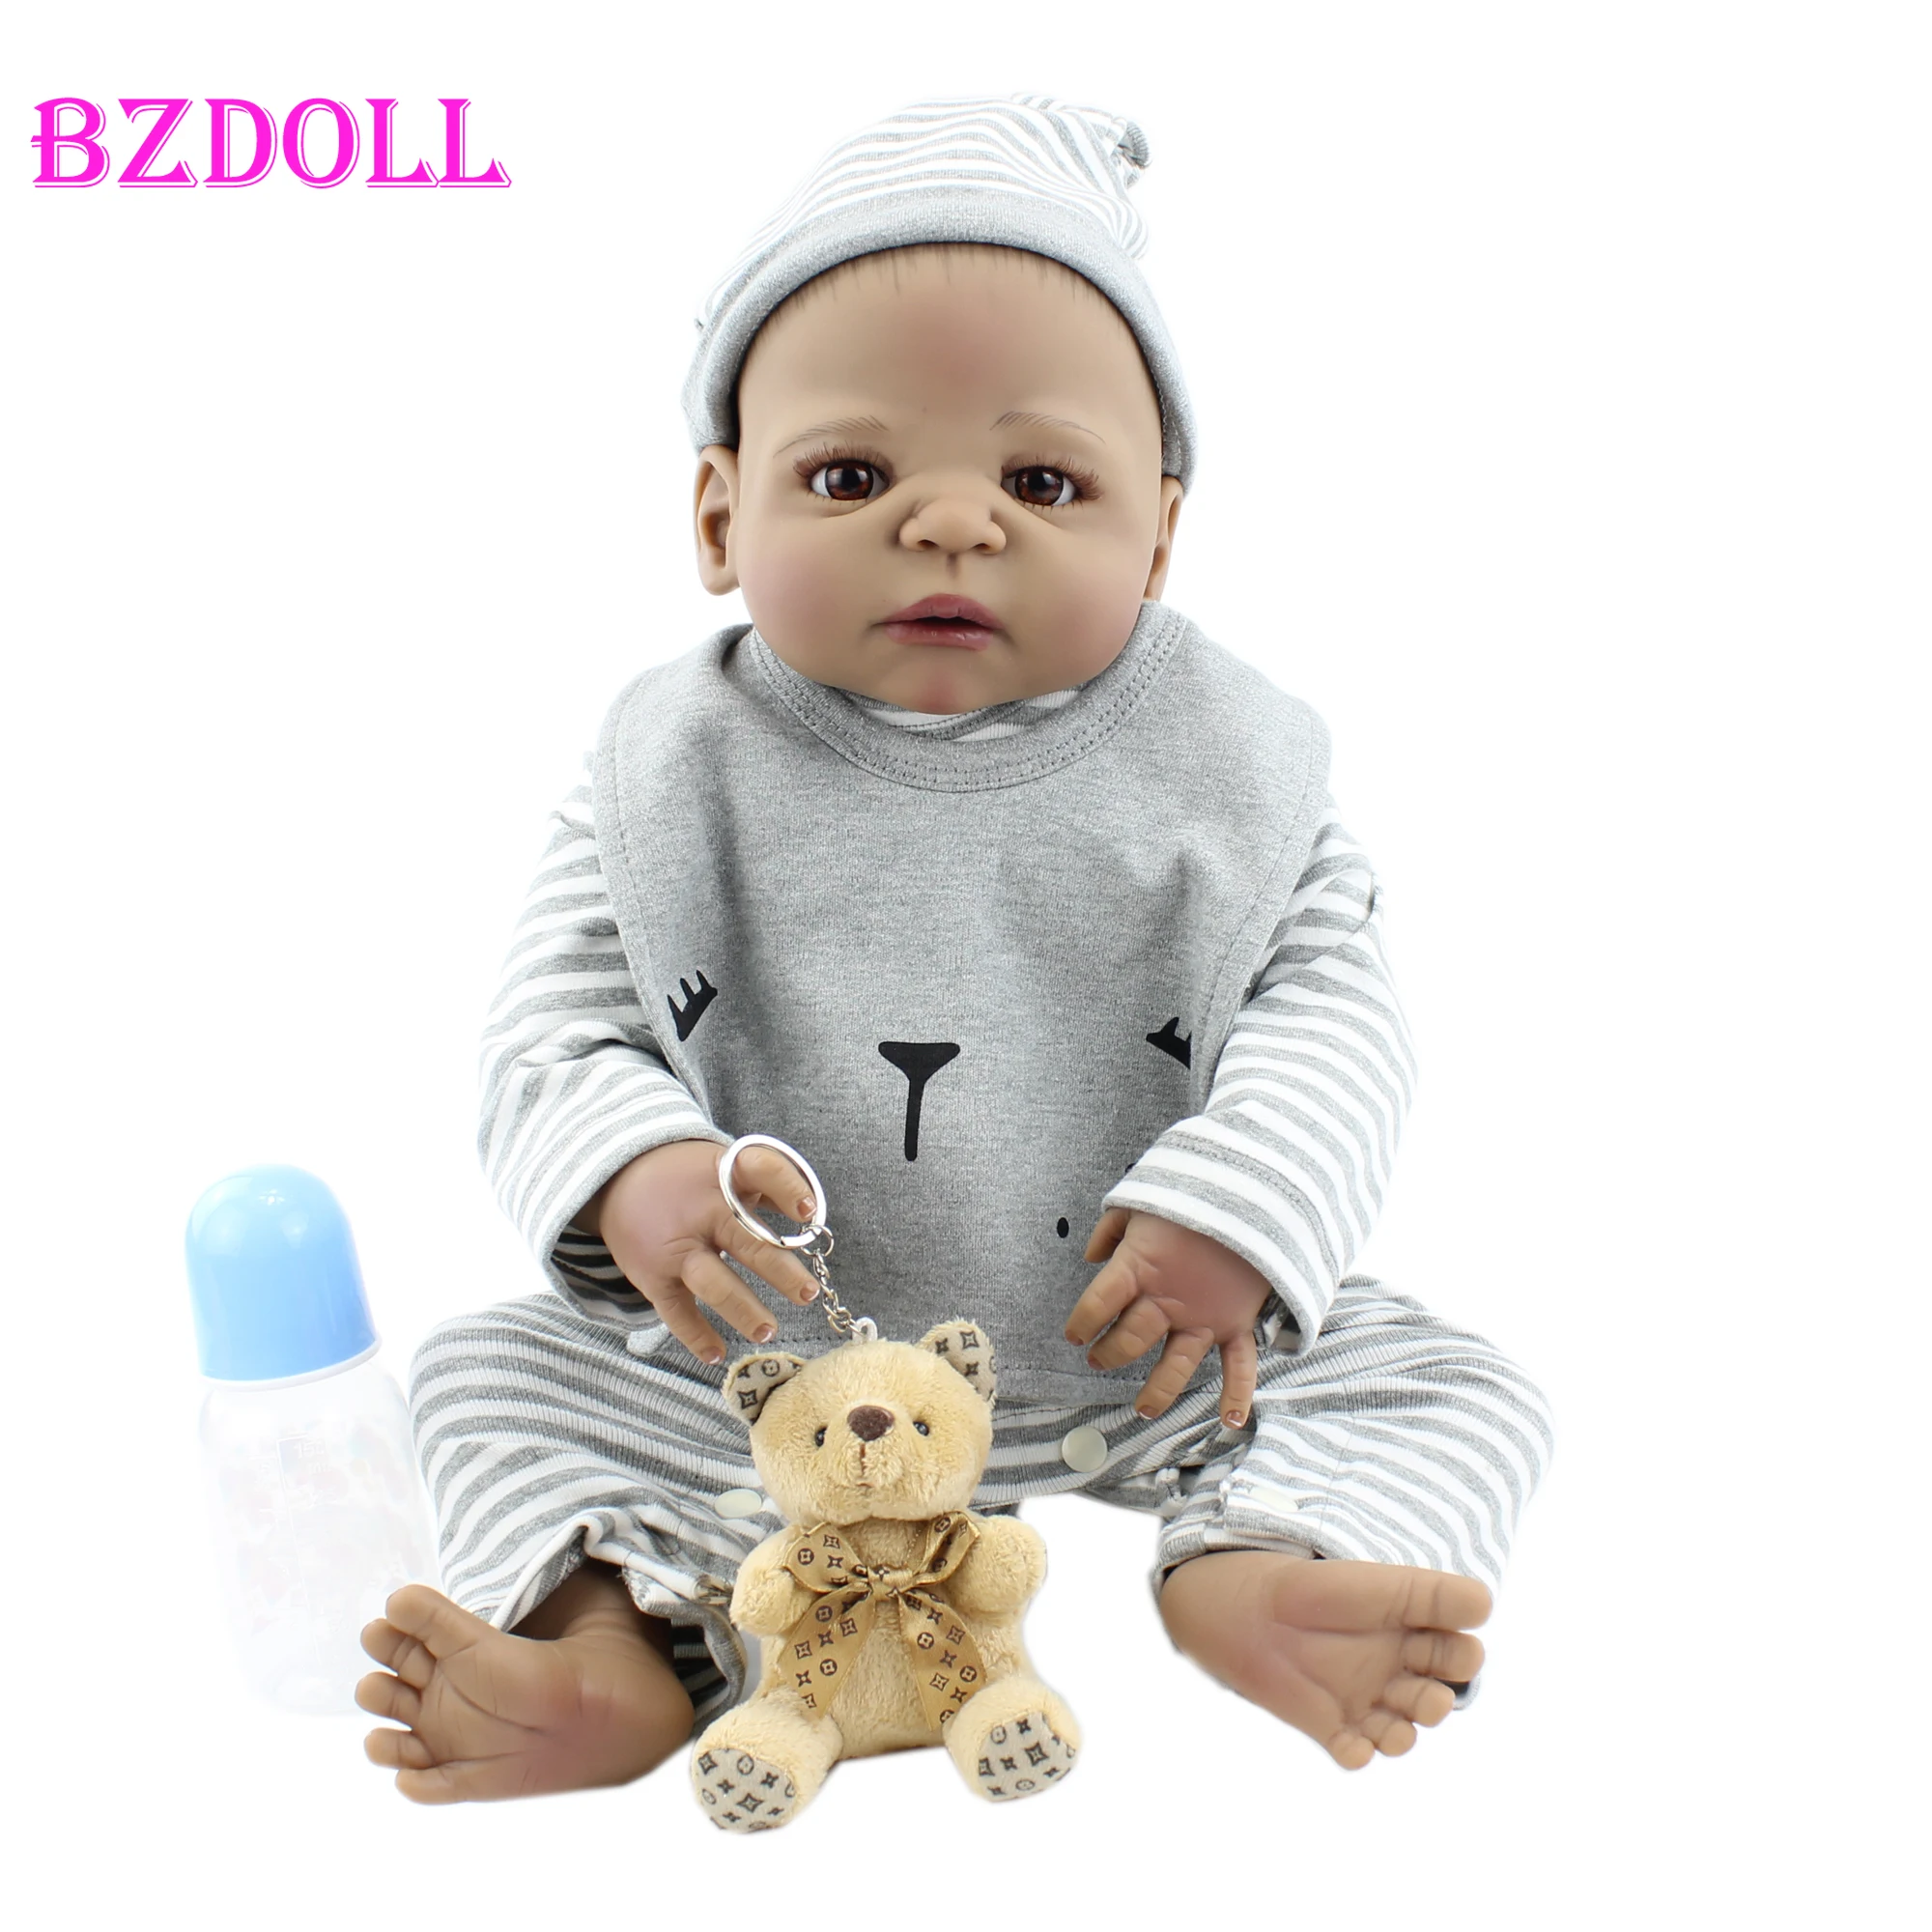 

55cm Full Silicone Reborn Boy Doll Toy Lifelike Soft Vinyl Black Skin Newborn Alive Babies Bebe Boneca Child Gift